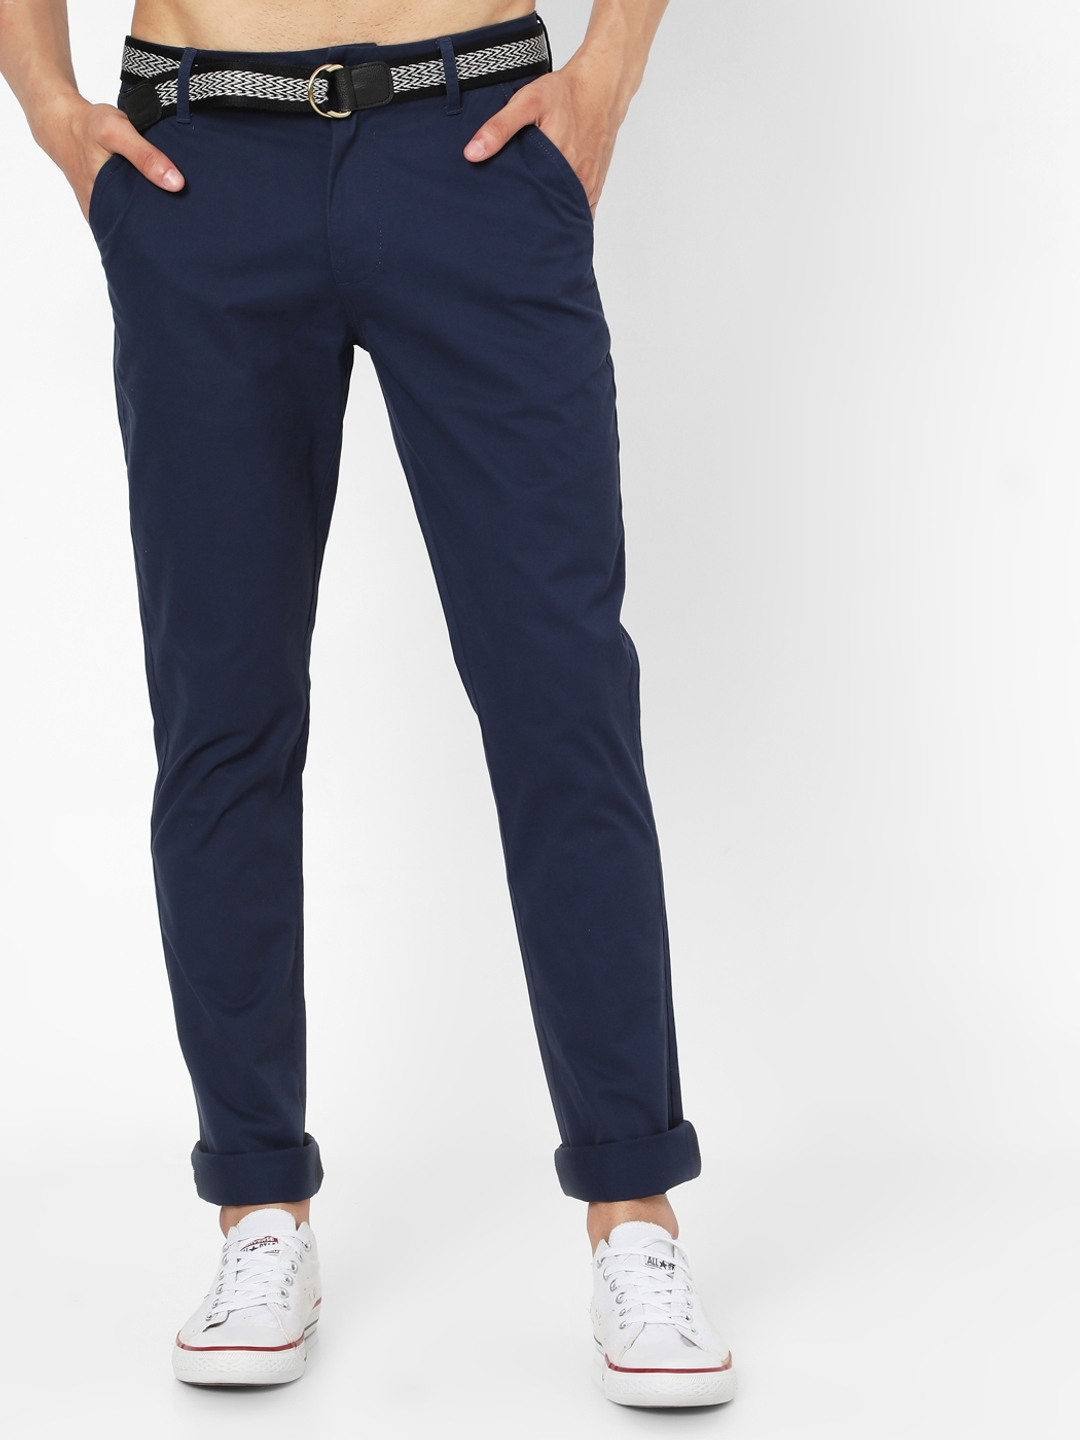 Buy Black Cotton Stretch Twill Flat Front Chino Trouser for Men Online   themillionbuckscom